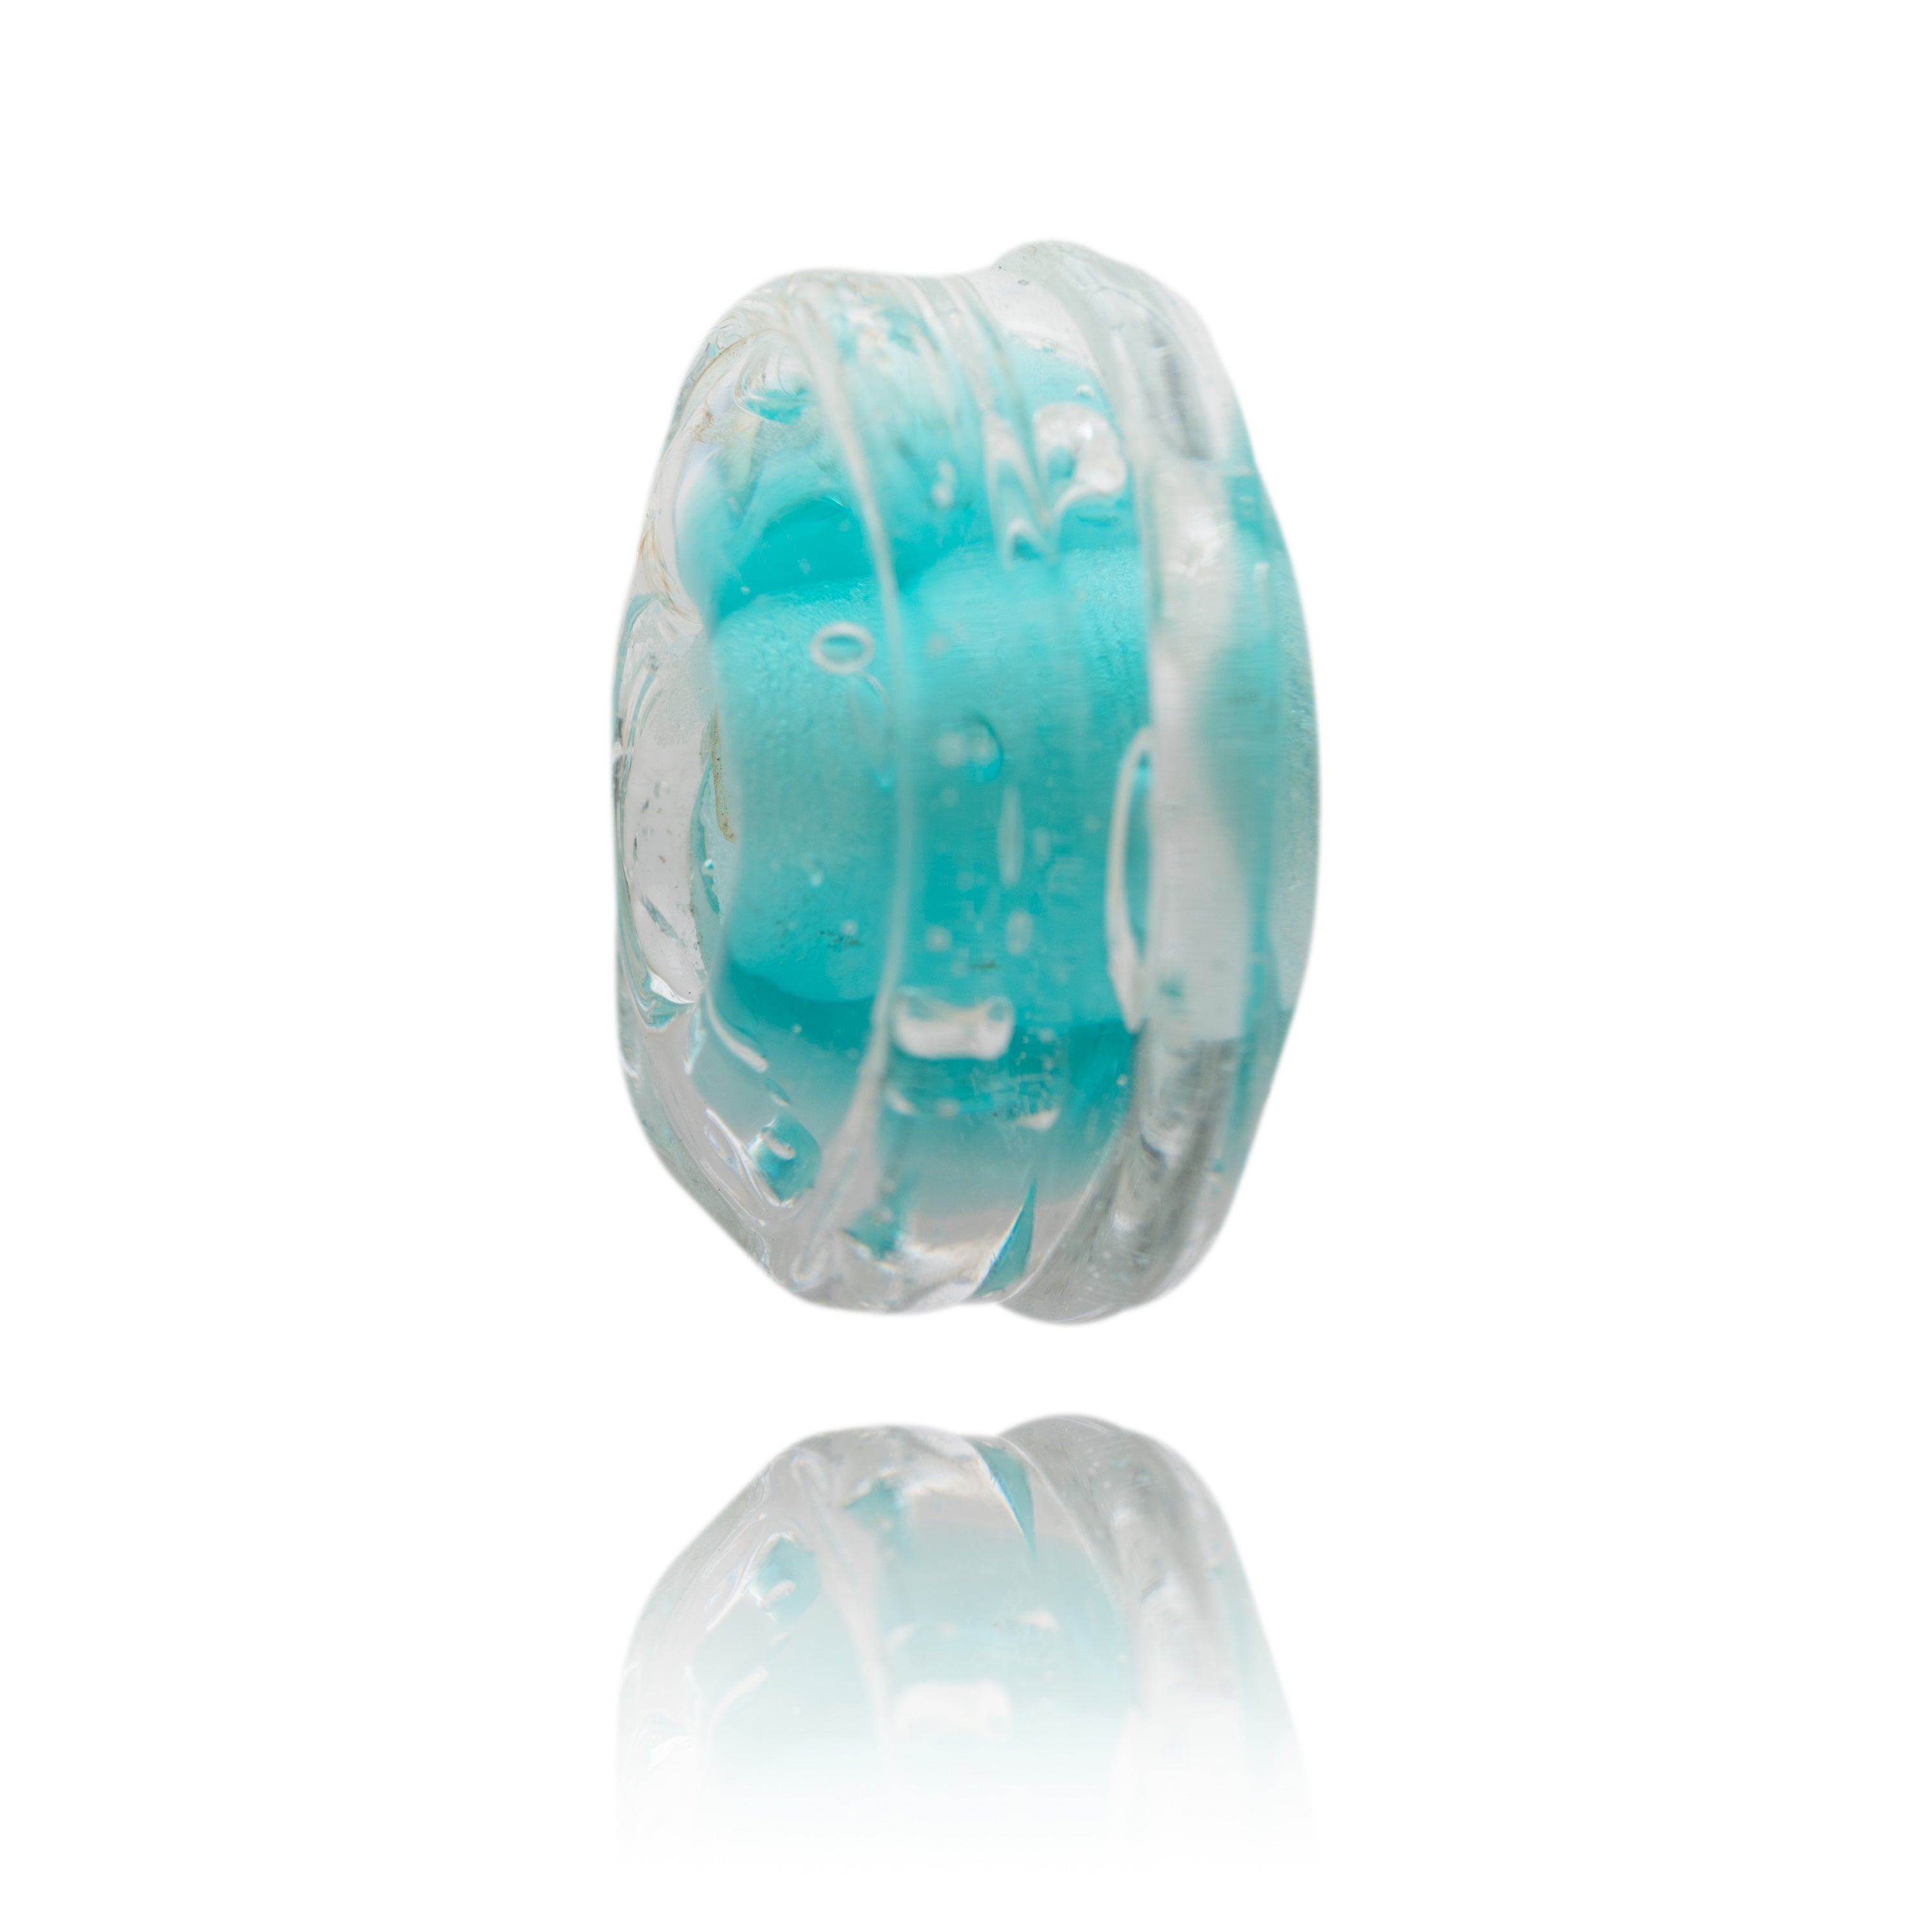 Turquoise glass bead representing Grebe Beach in Cornwall